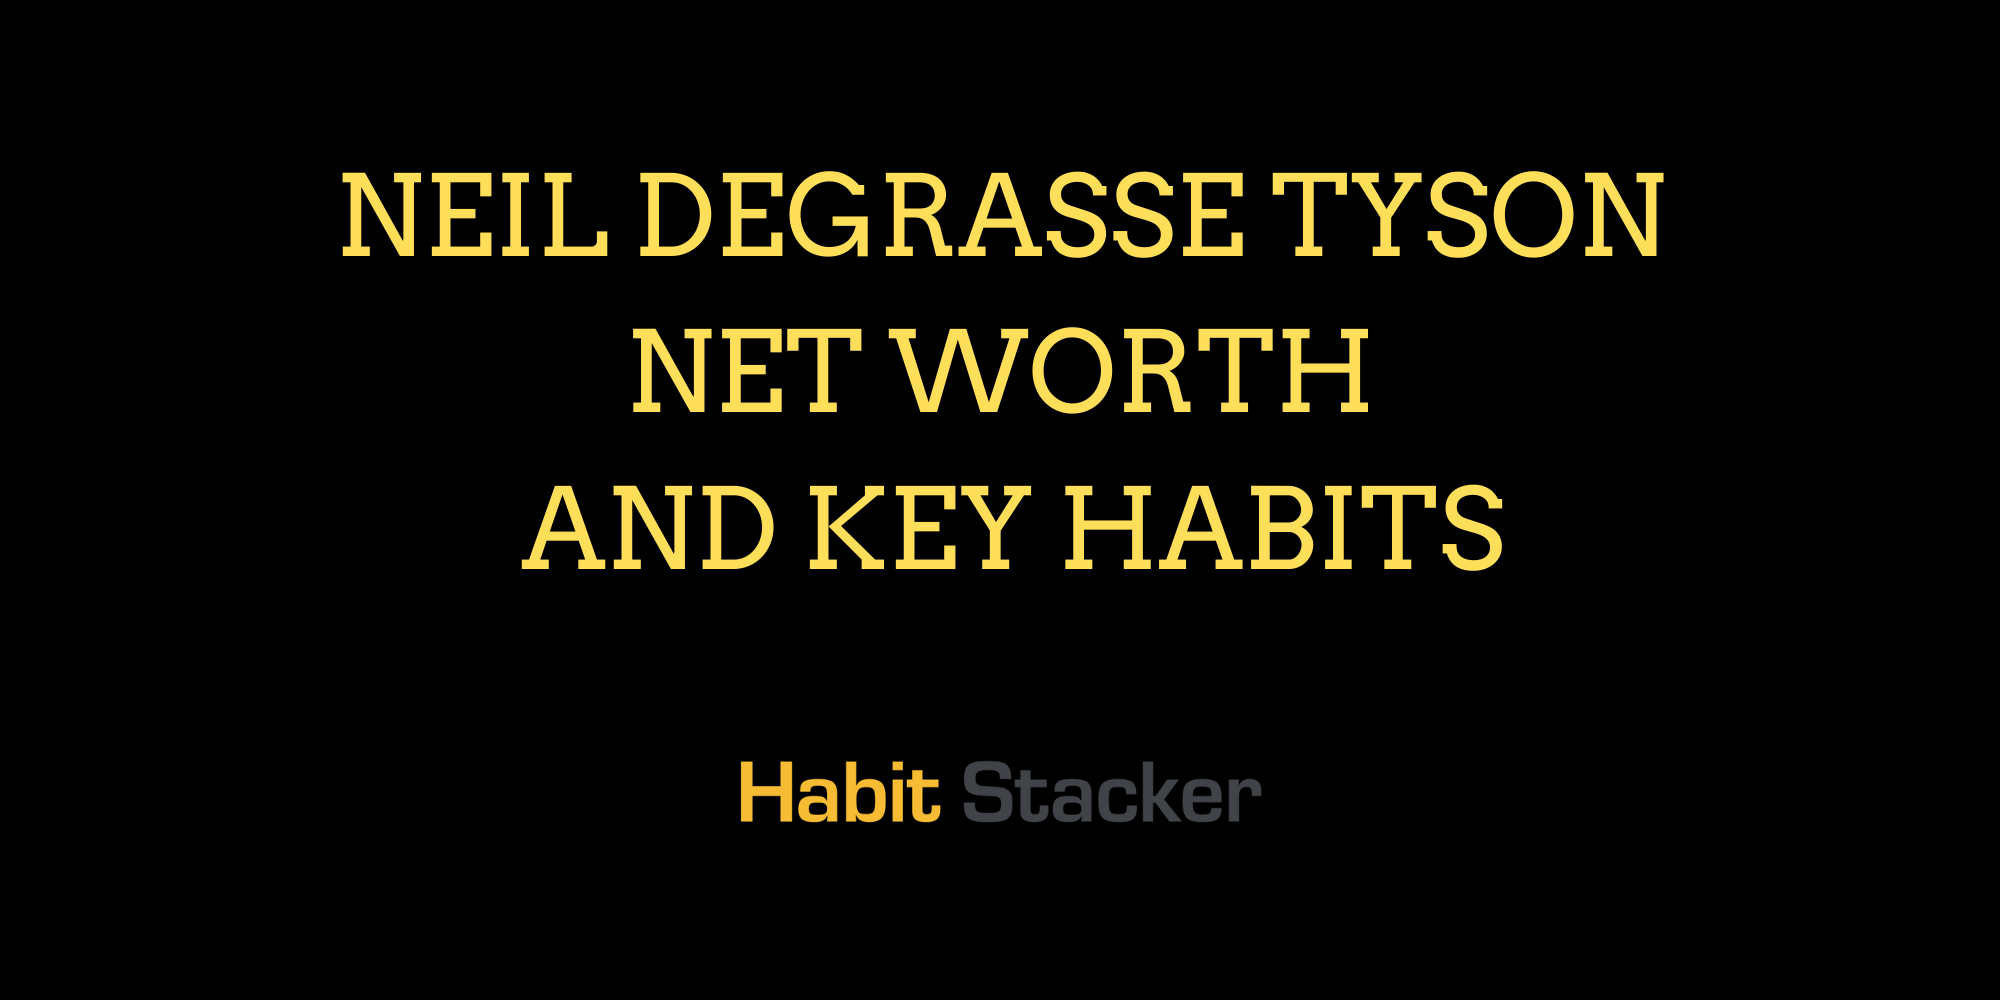 Neil Degrasse Tyson Net Worth and Key Habits